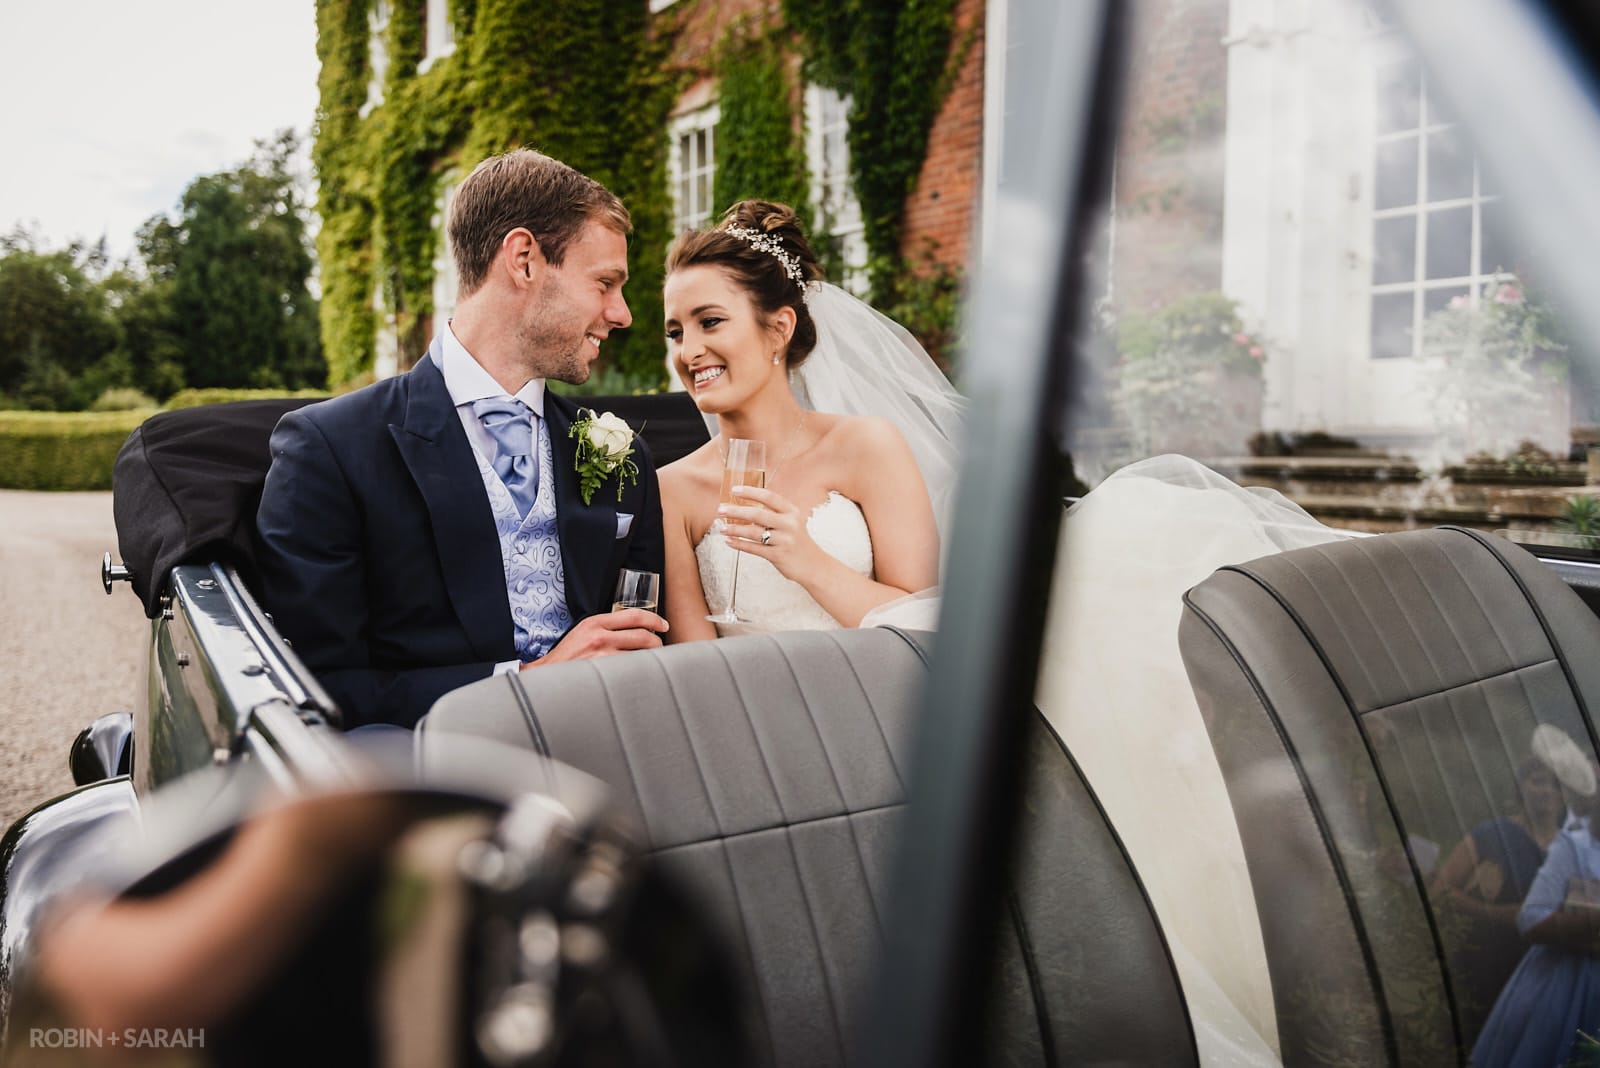 Bride and groom in open-top car at Delbury Hall